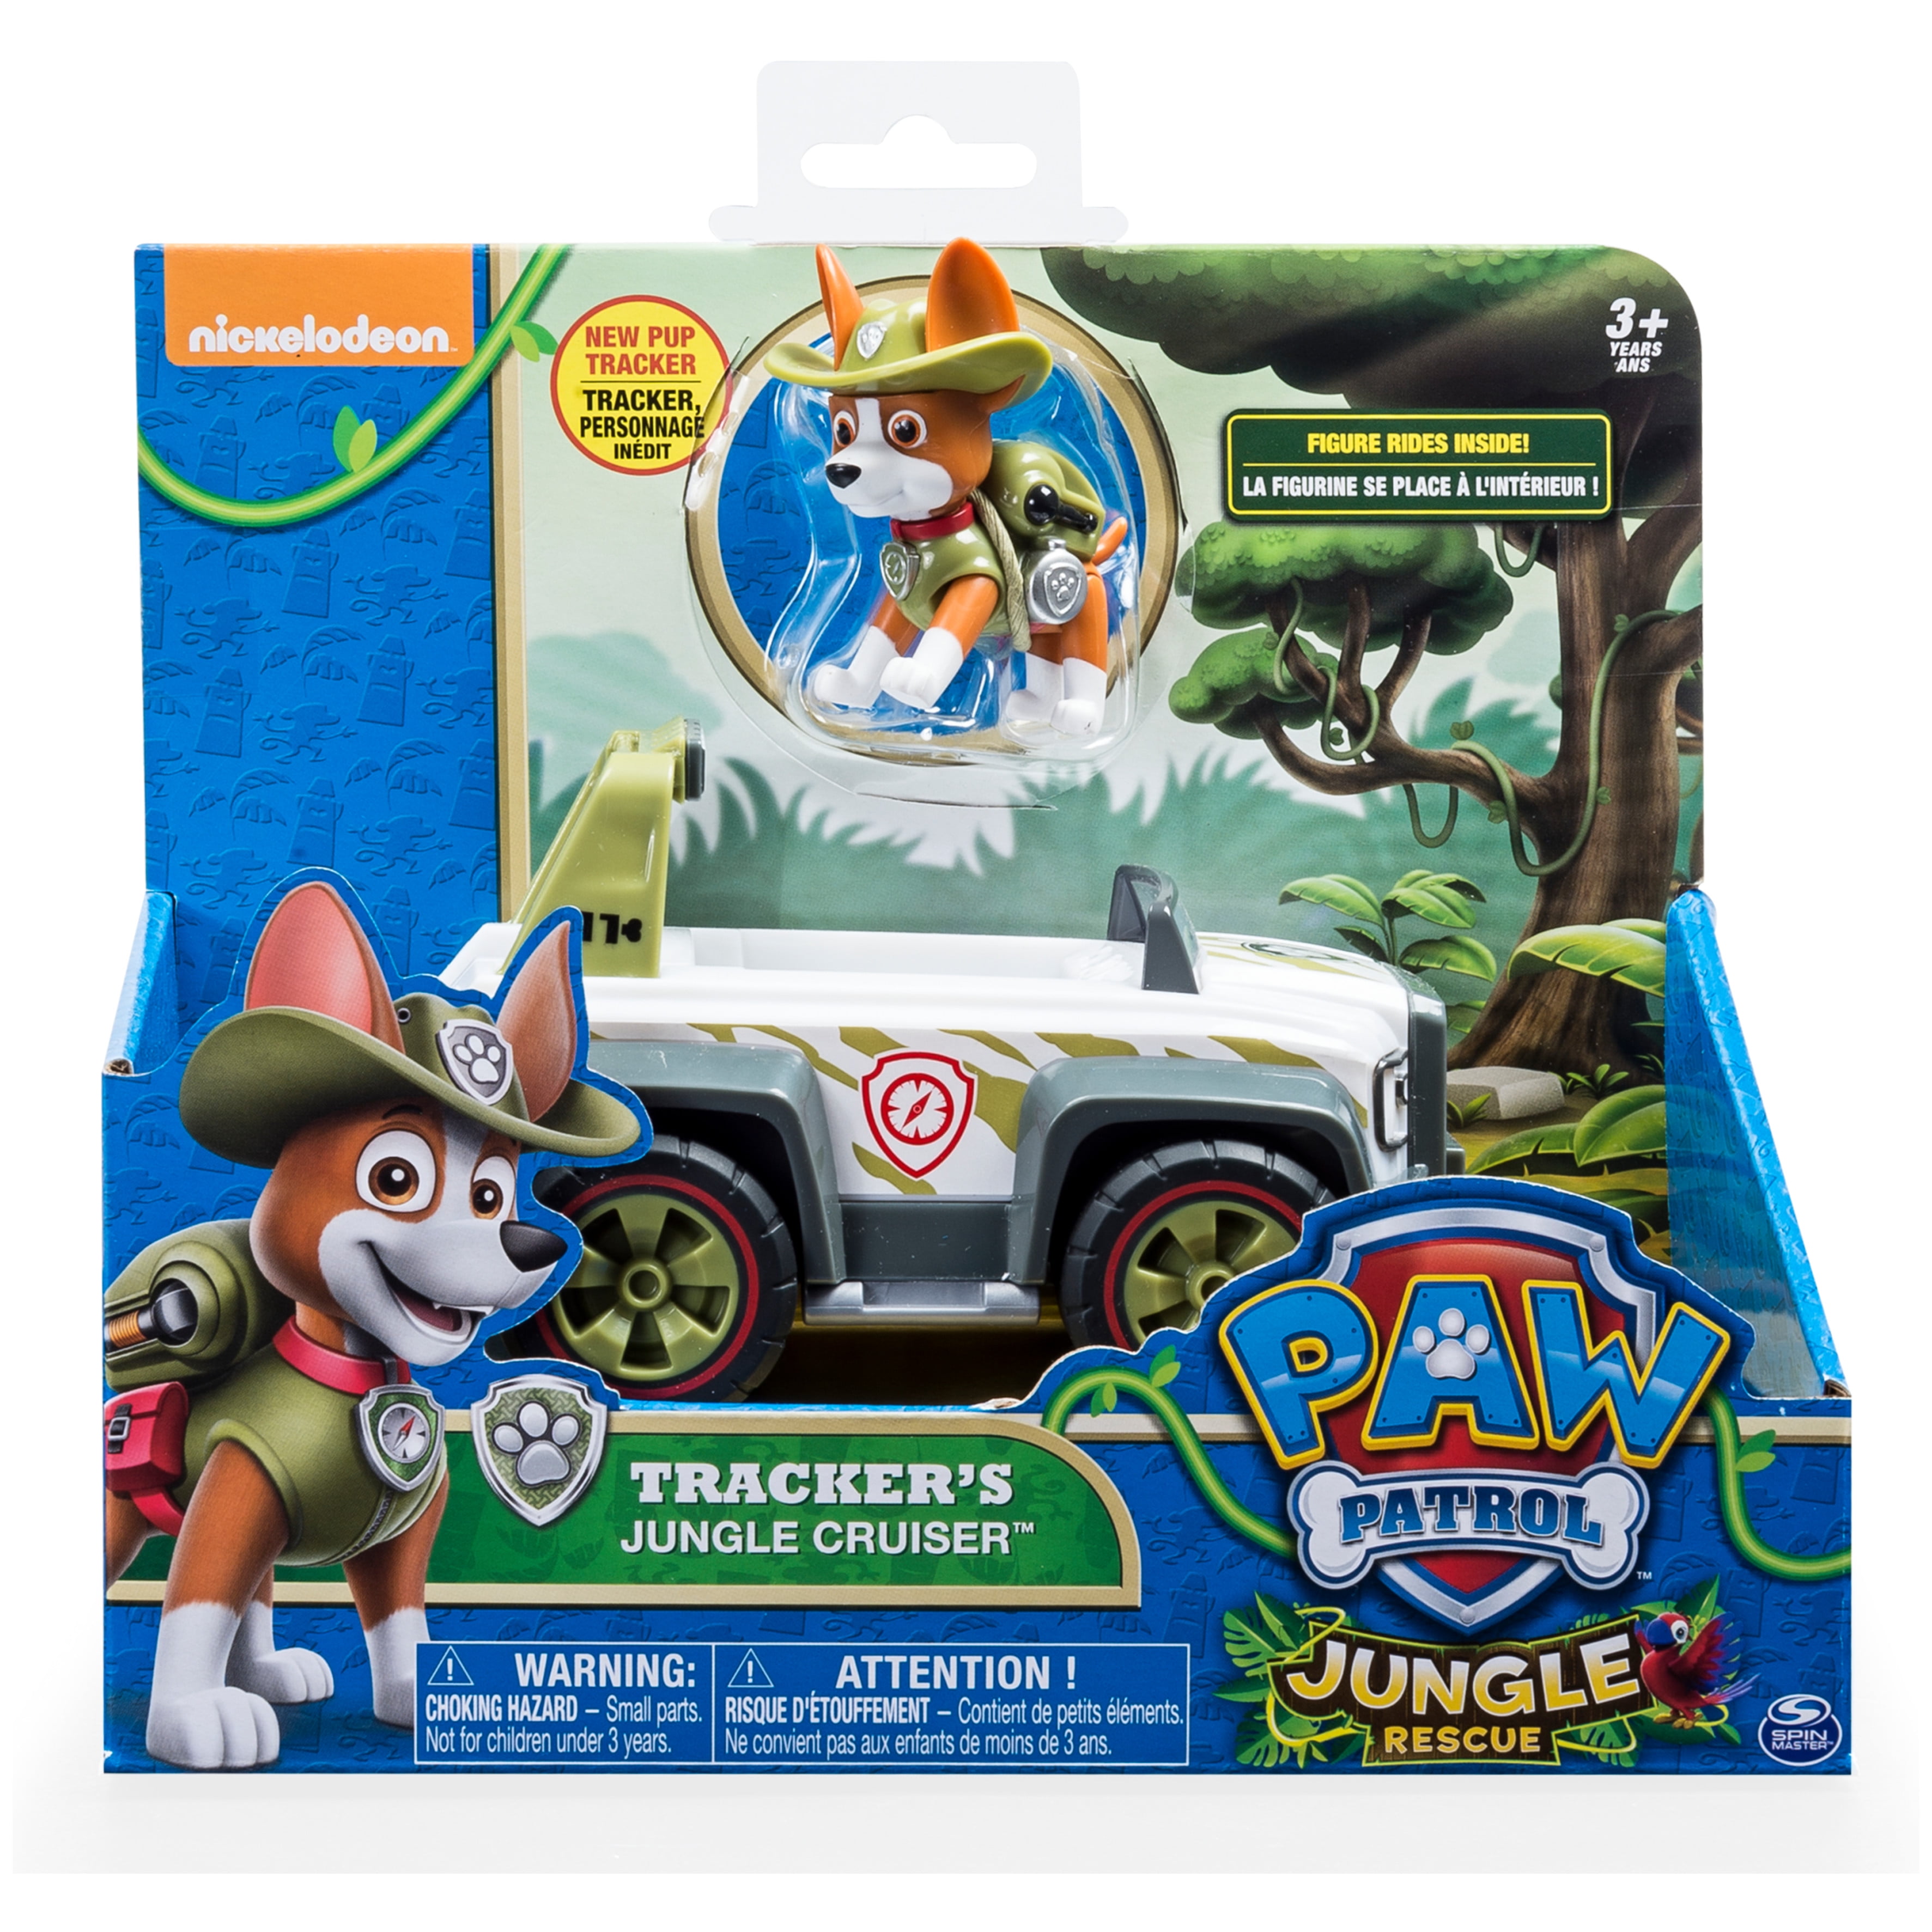 Paw Patrol, Jungle Rescue, Tracker’s Jungle Cruiser, Vehicle and Figure